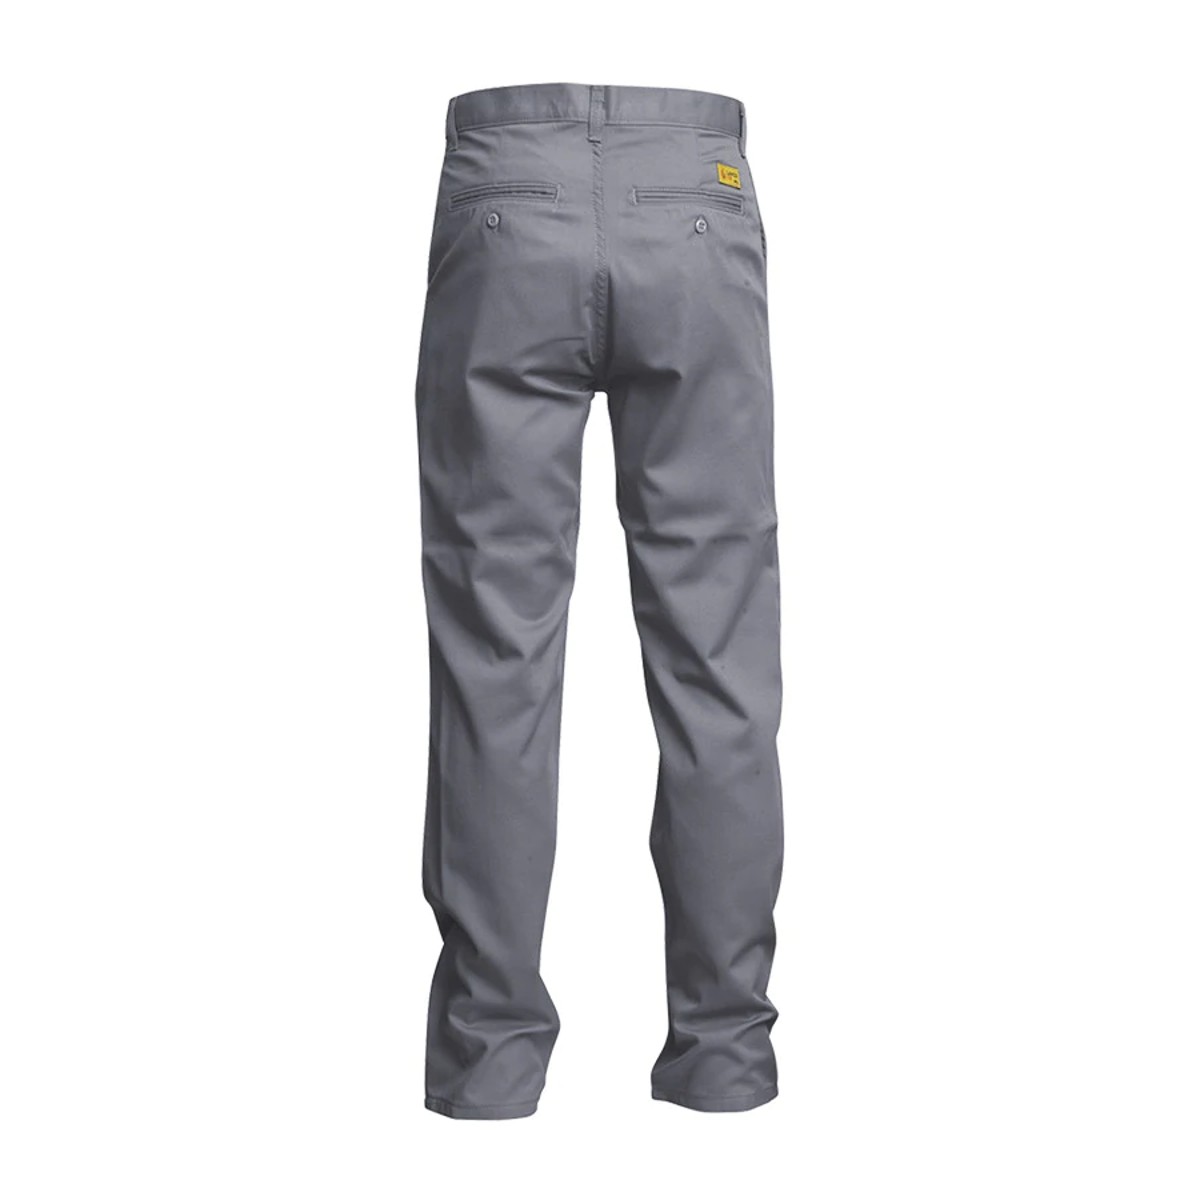 LAPCO FR Uniform Pants in Westex UltraSoft in Gray